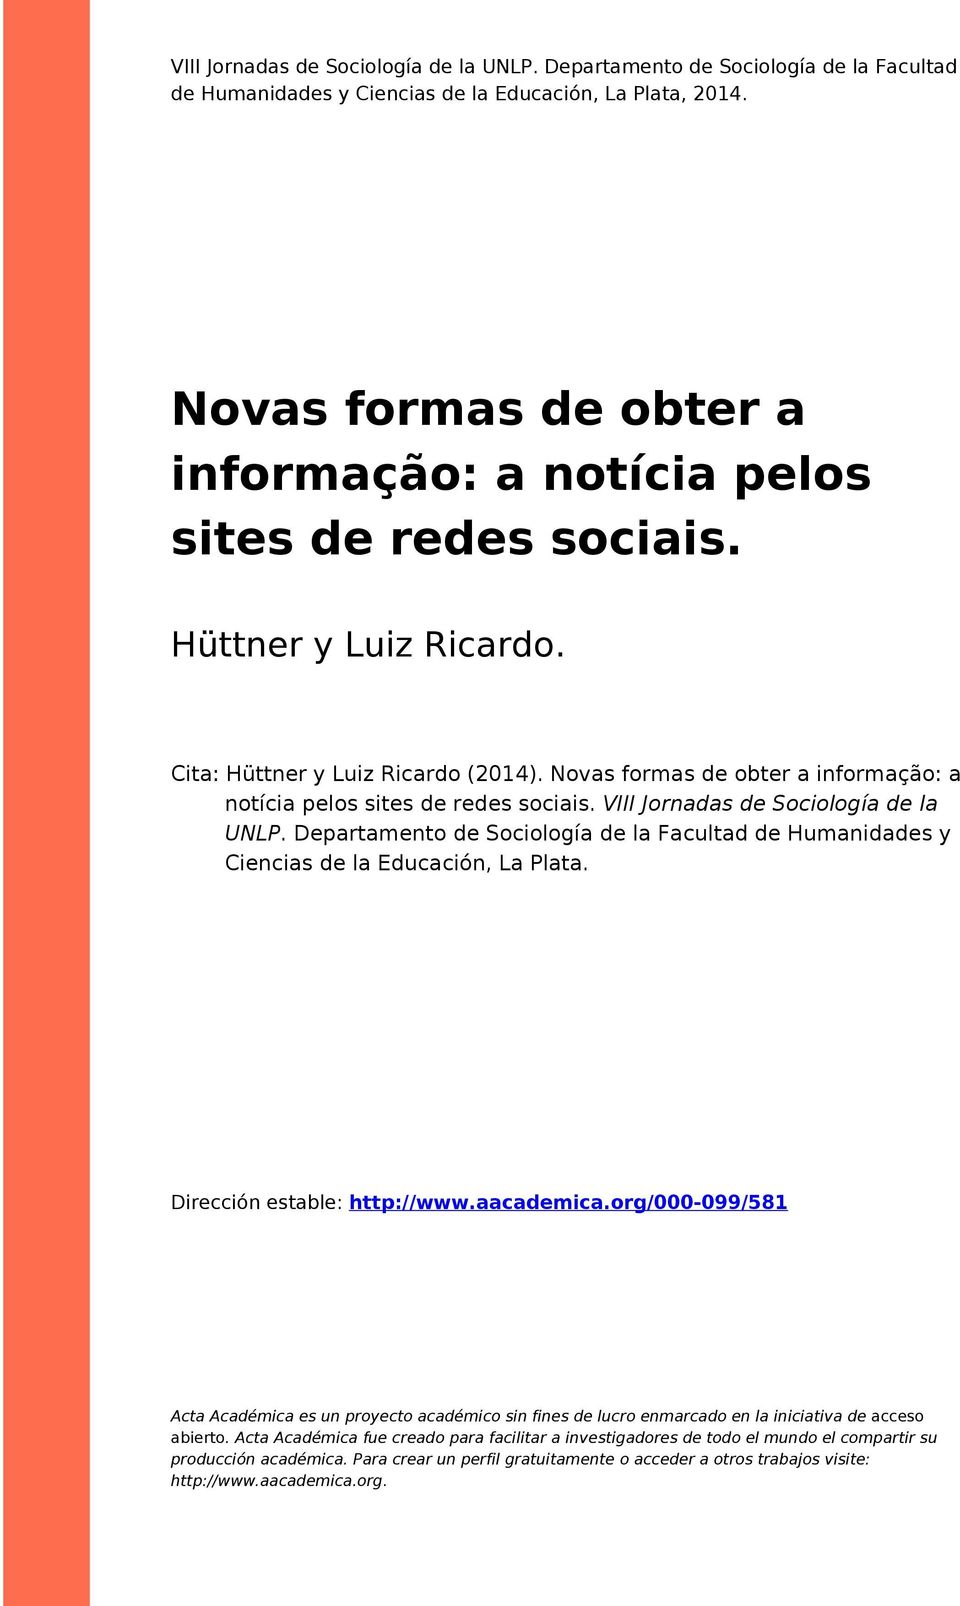 Novas formas de obter a informação: a notícia pelos sites de redes sociais. VIII Jornadas de Sociología de la UNLP.